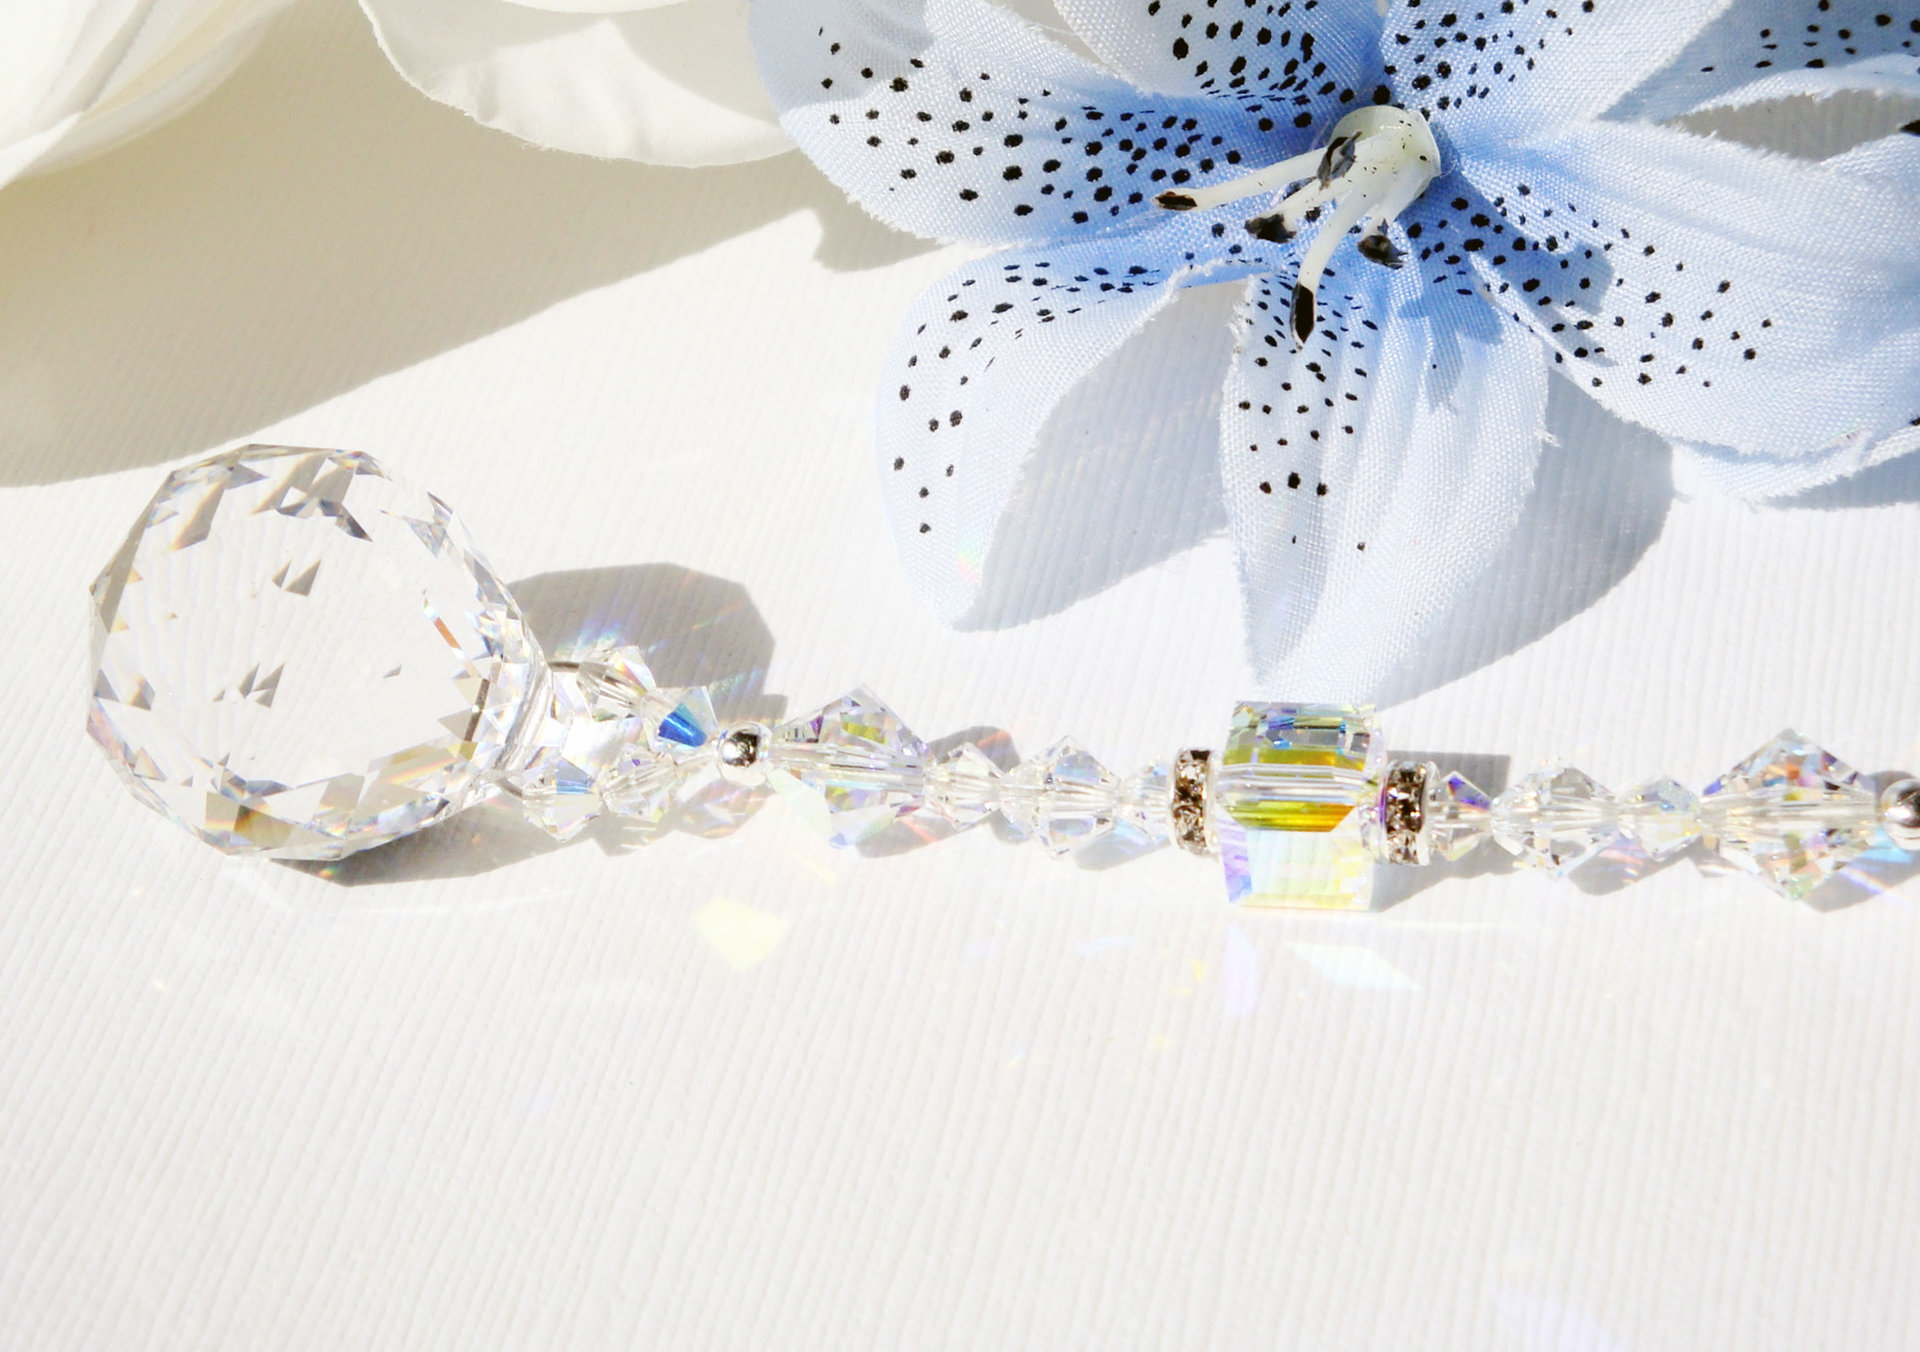 Crystal Ball Ceiling Fan Pull Chain, Swarovski Crystals Light Pull, Crystal  Prism